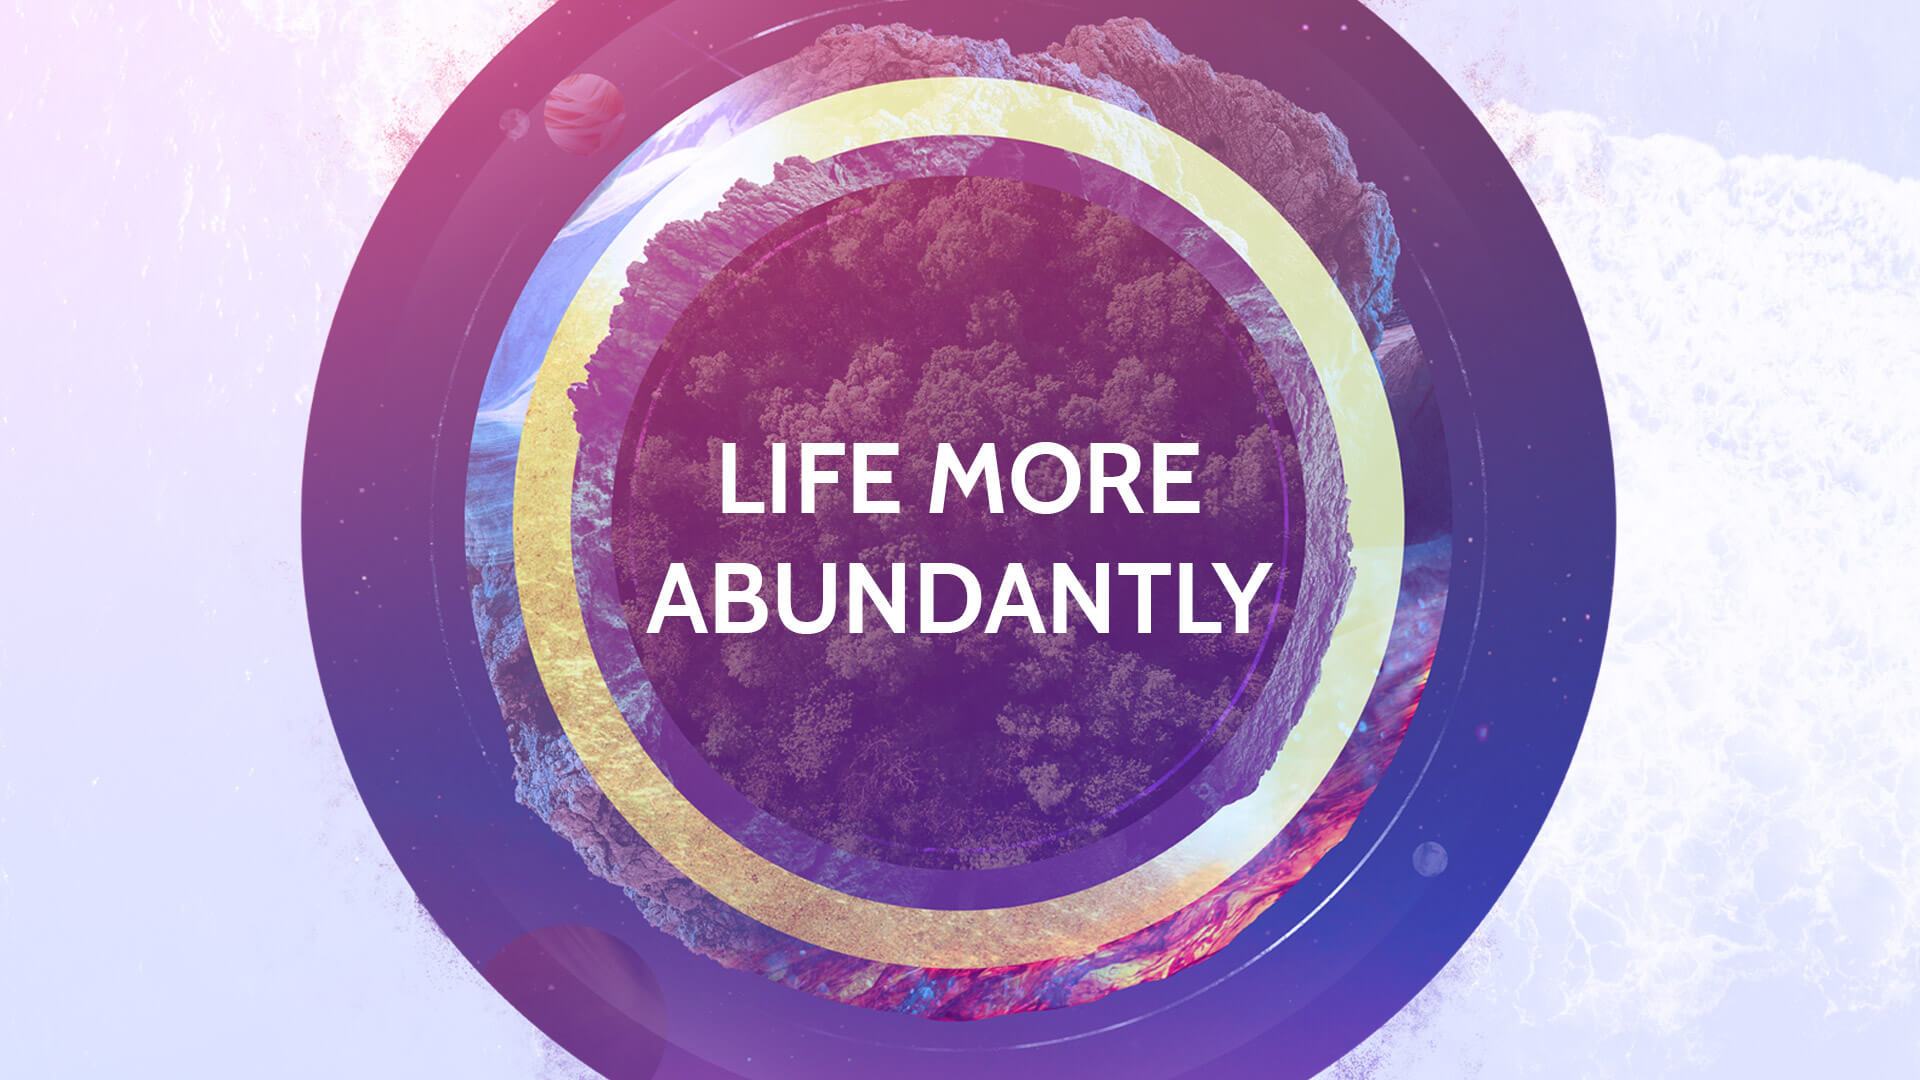 Life More Abundantly